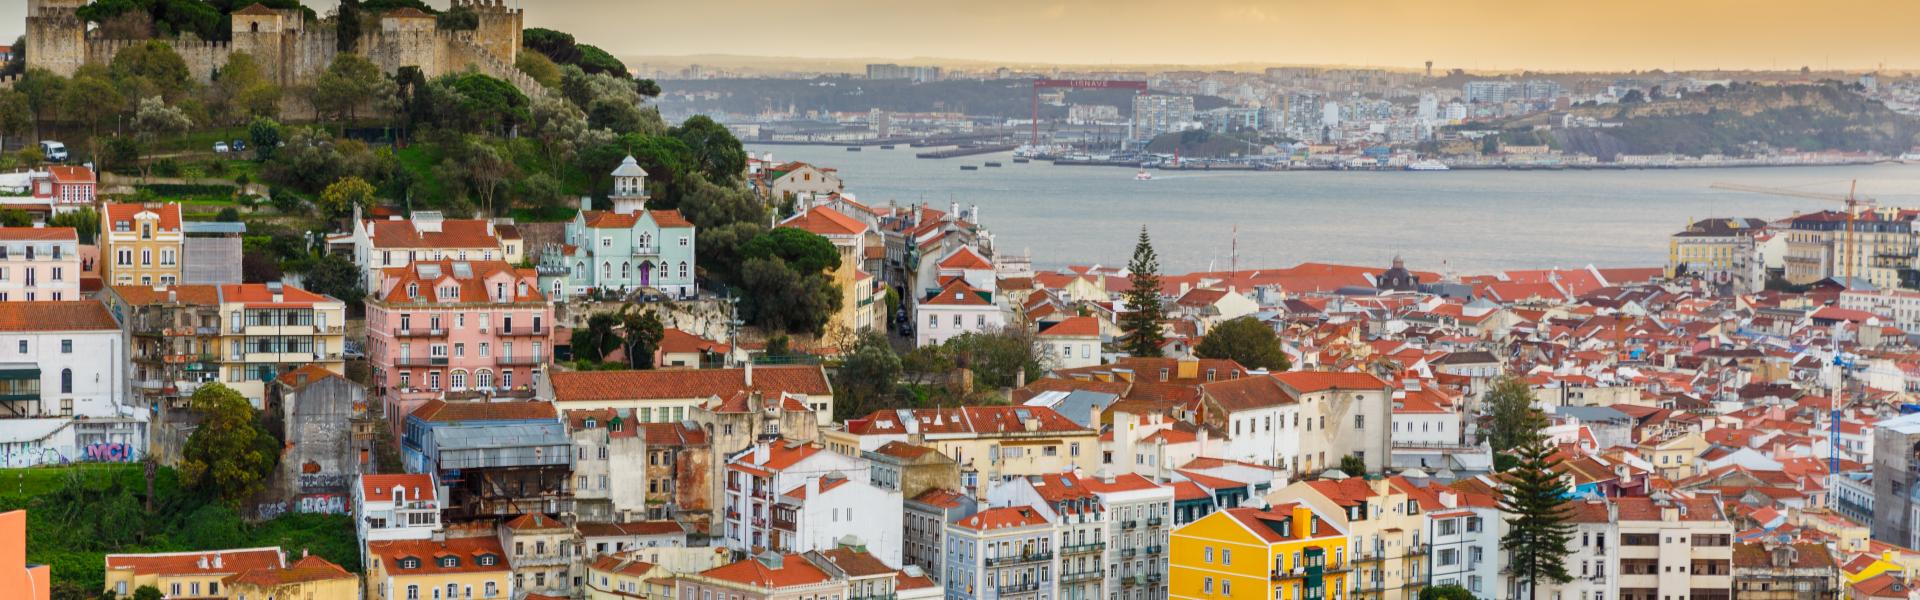 Vakantiehuizen en appartementen in Lissabon - Wimdu